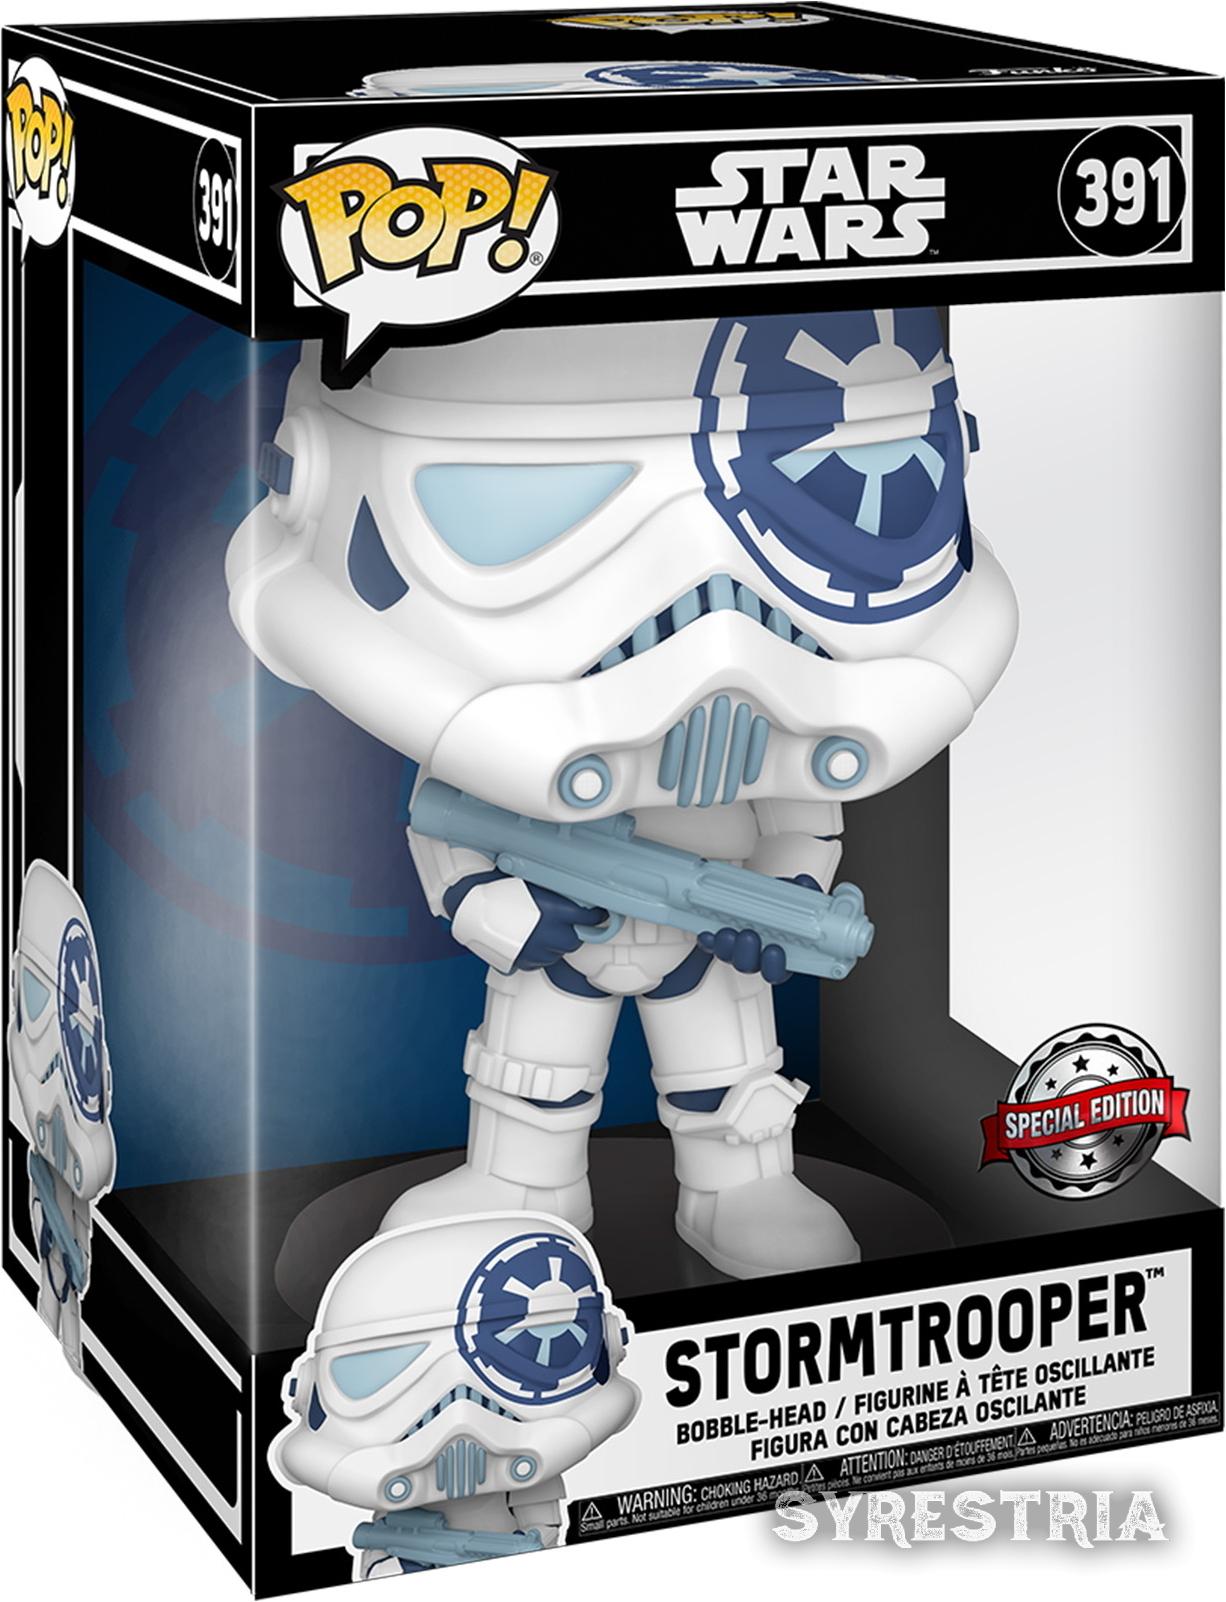 Star Wars - Stormtrooper 391 Special Edition - Funko Pop! - Vinyl Figur